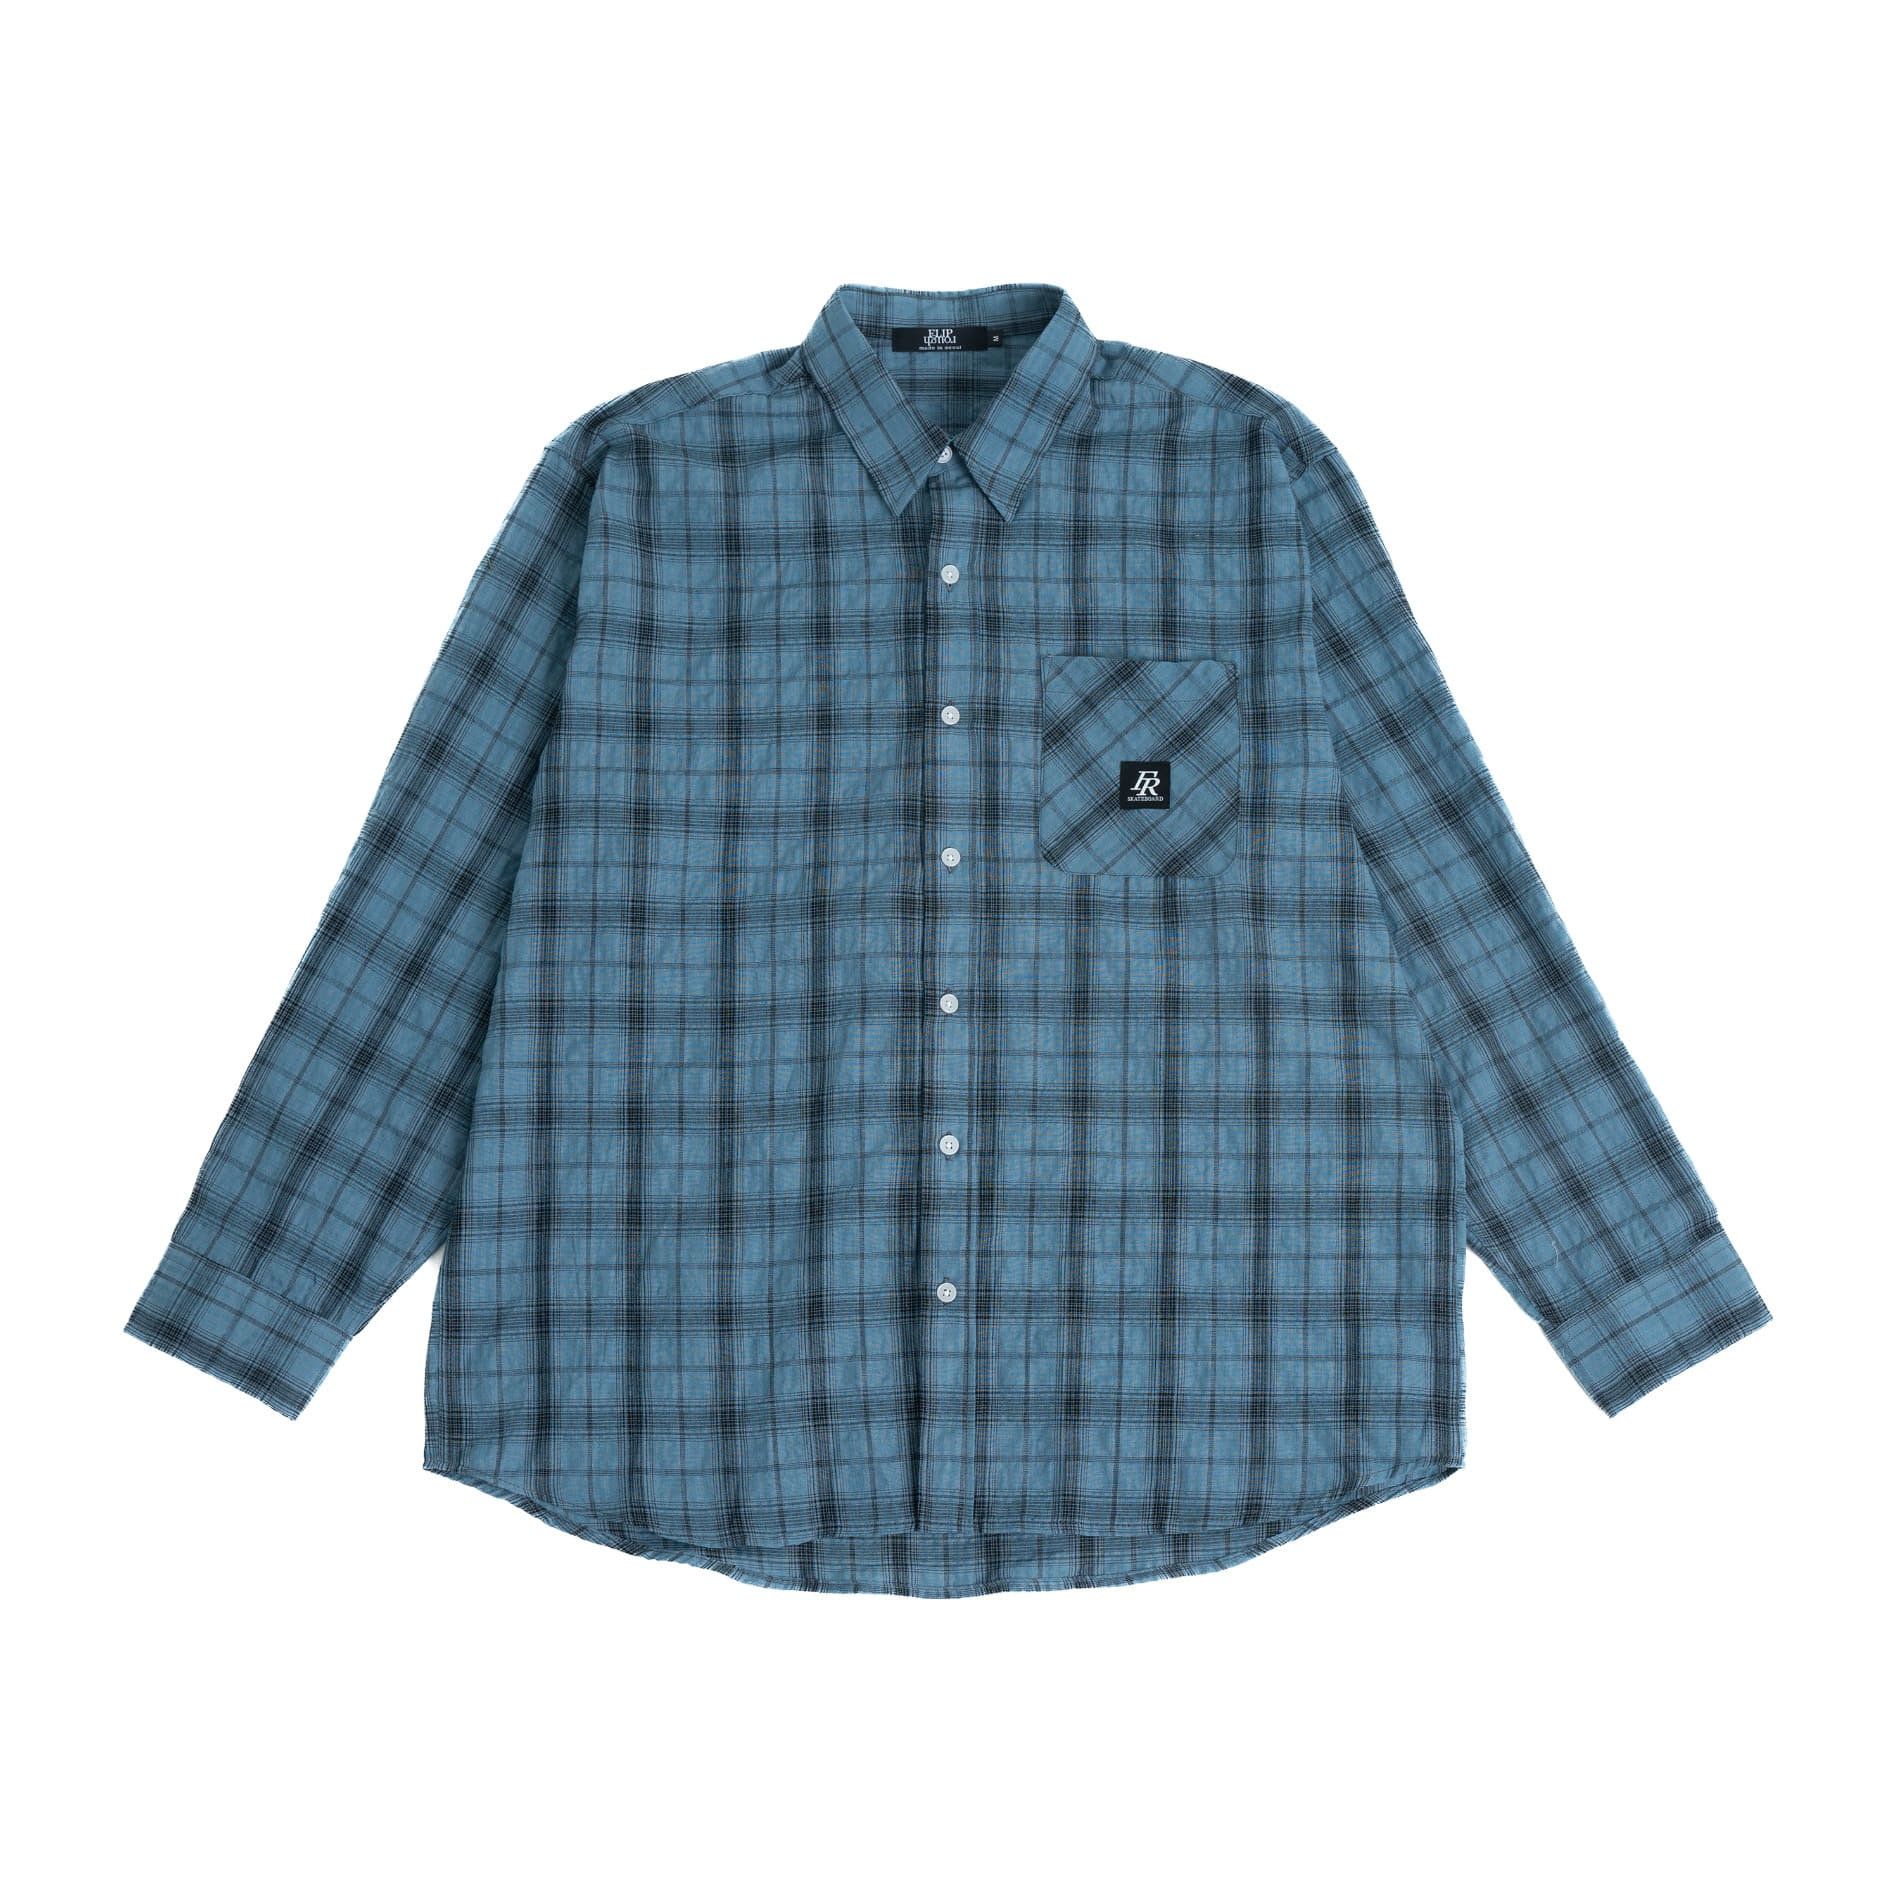 FR Lumber Jack Shirt - Blue